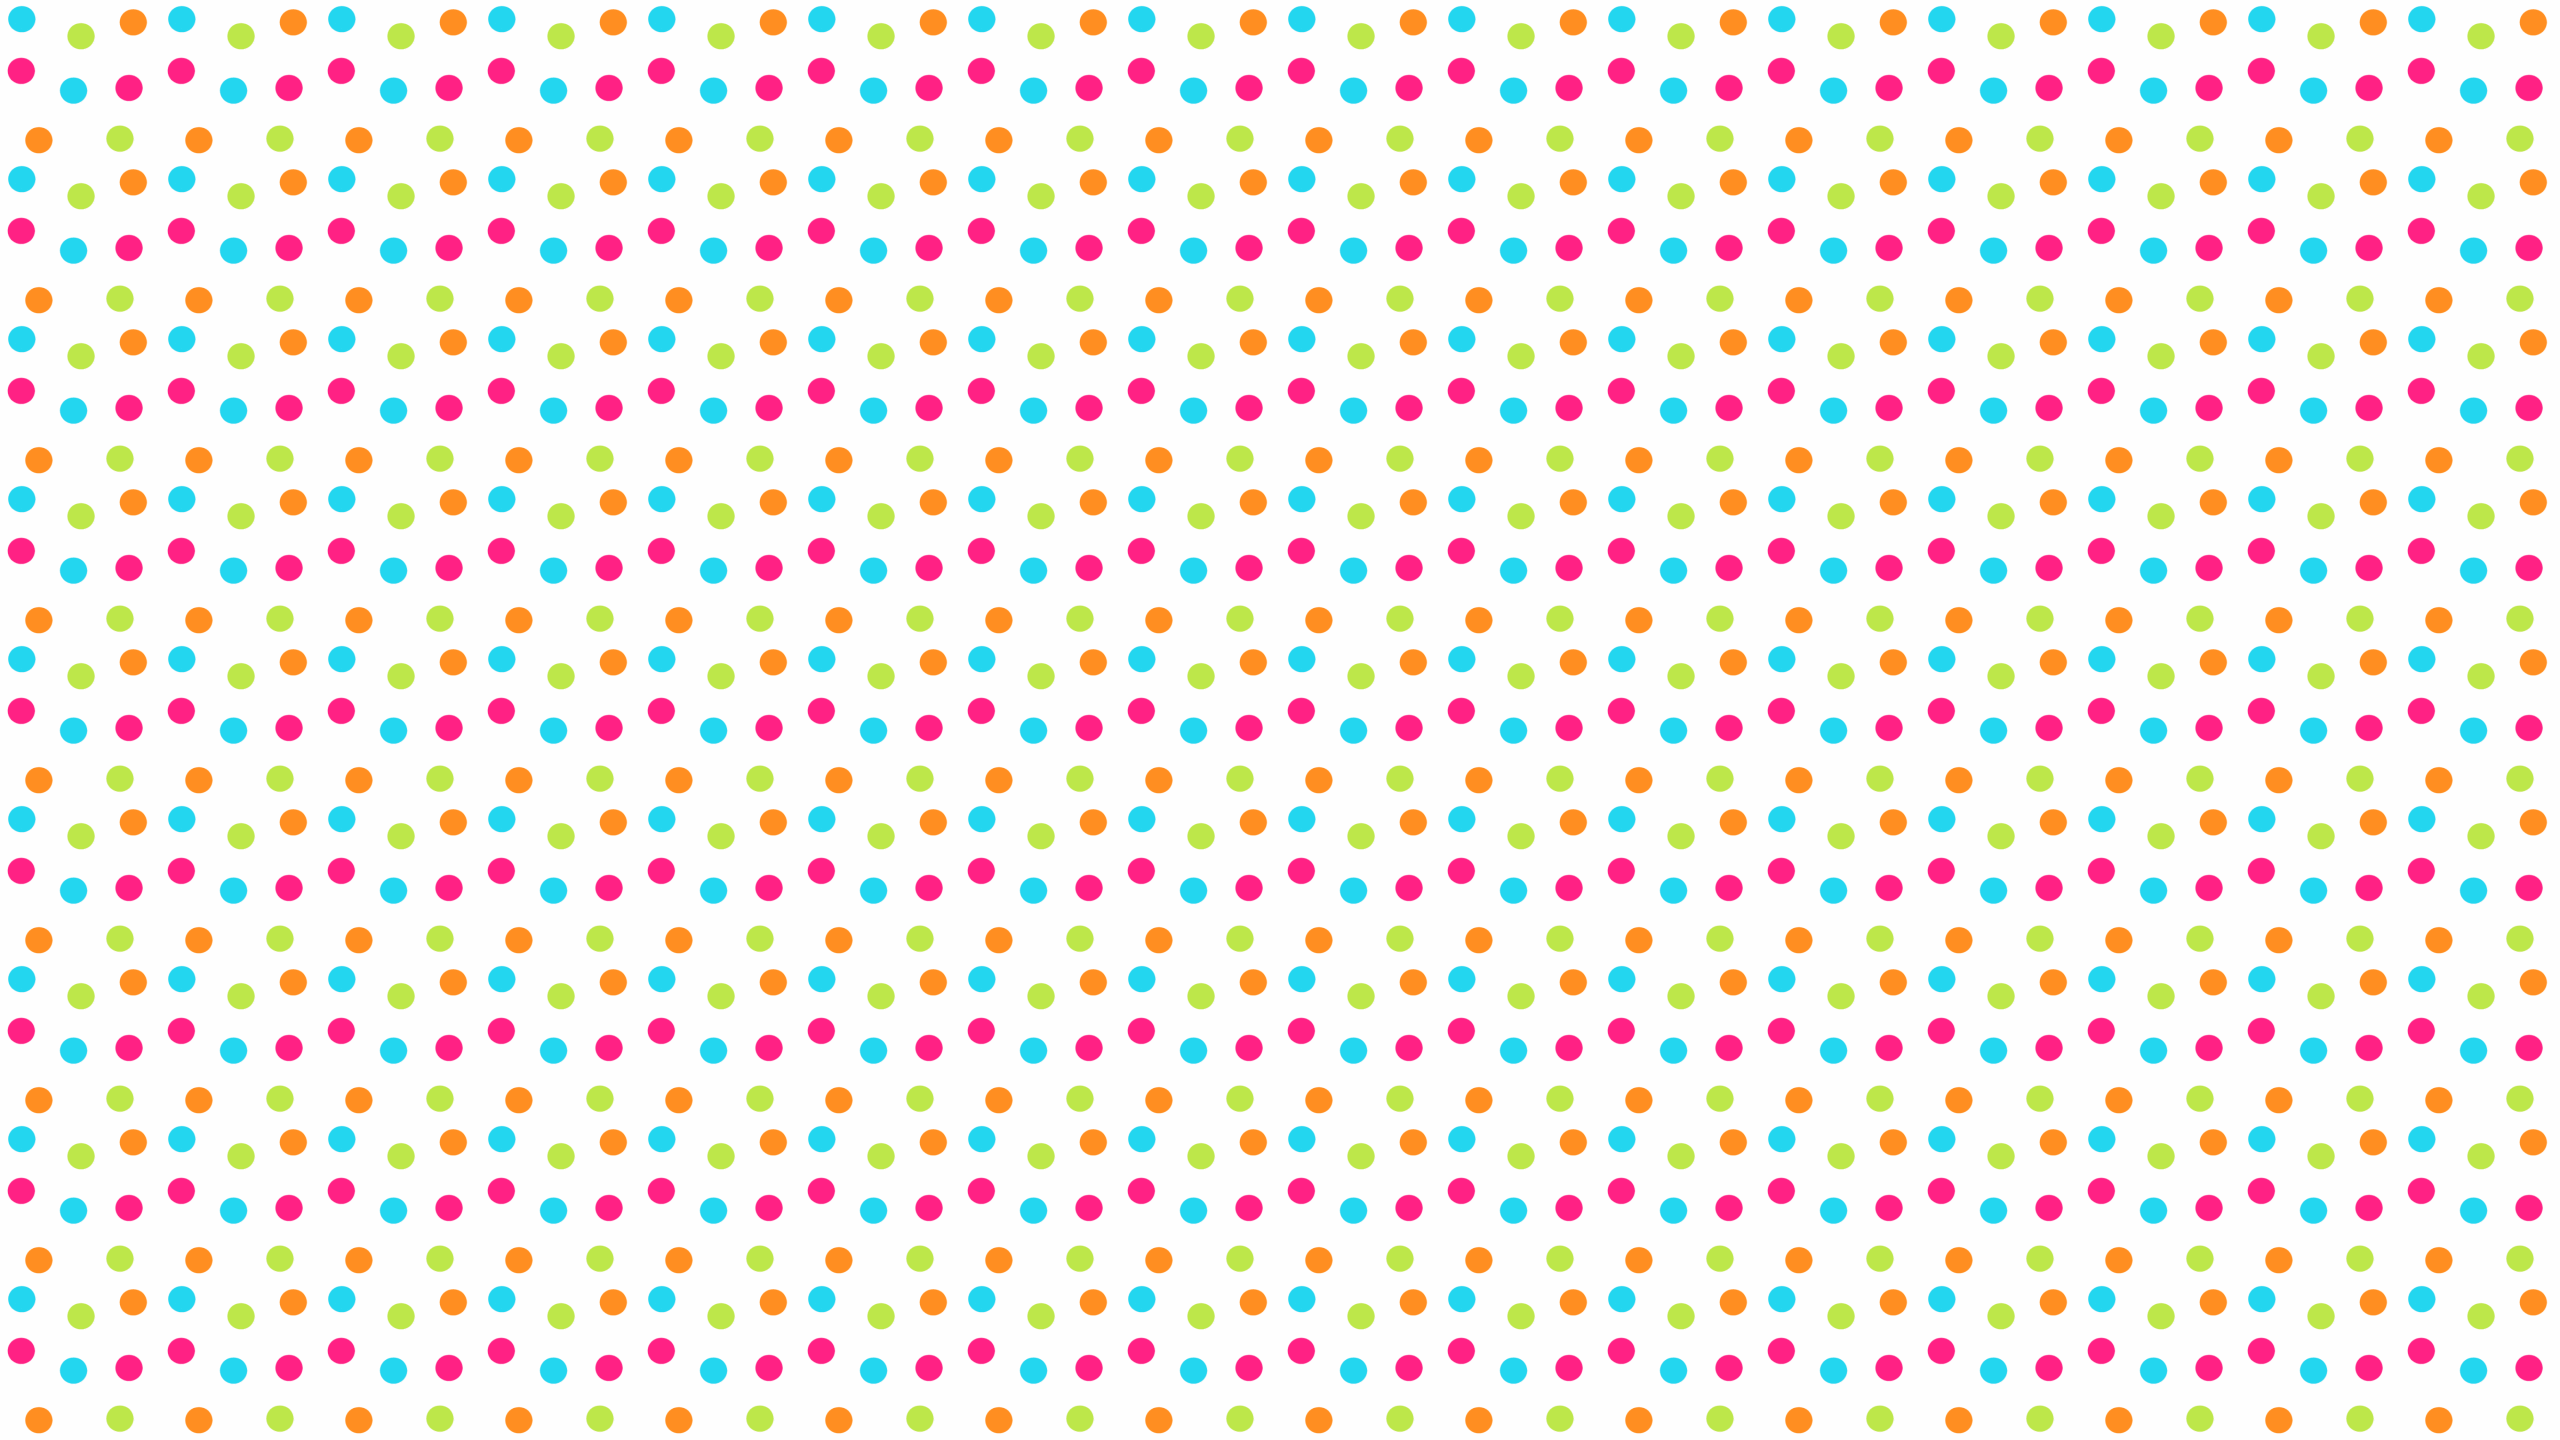 rainbow polka dot background